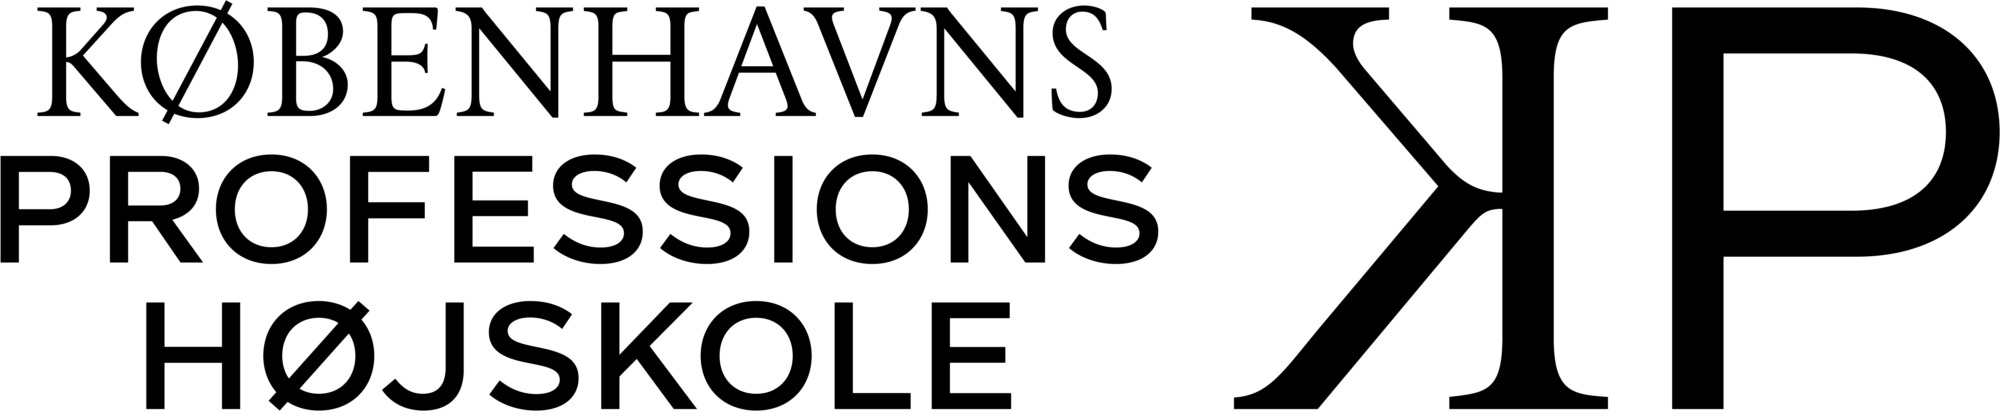 kp-logo-external-use-dk-black-rgb-1